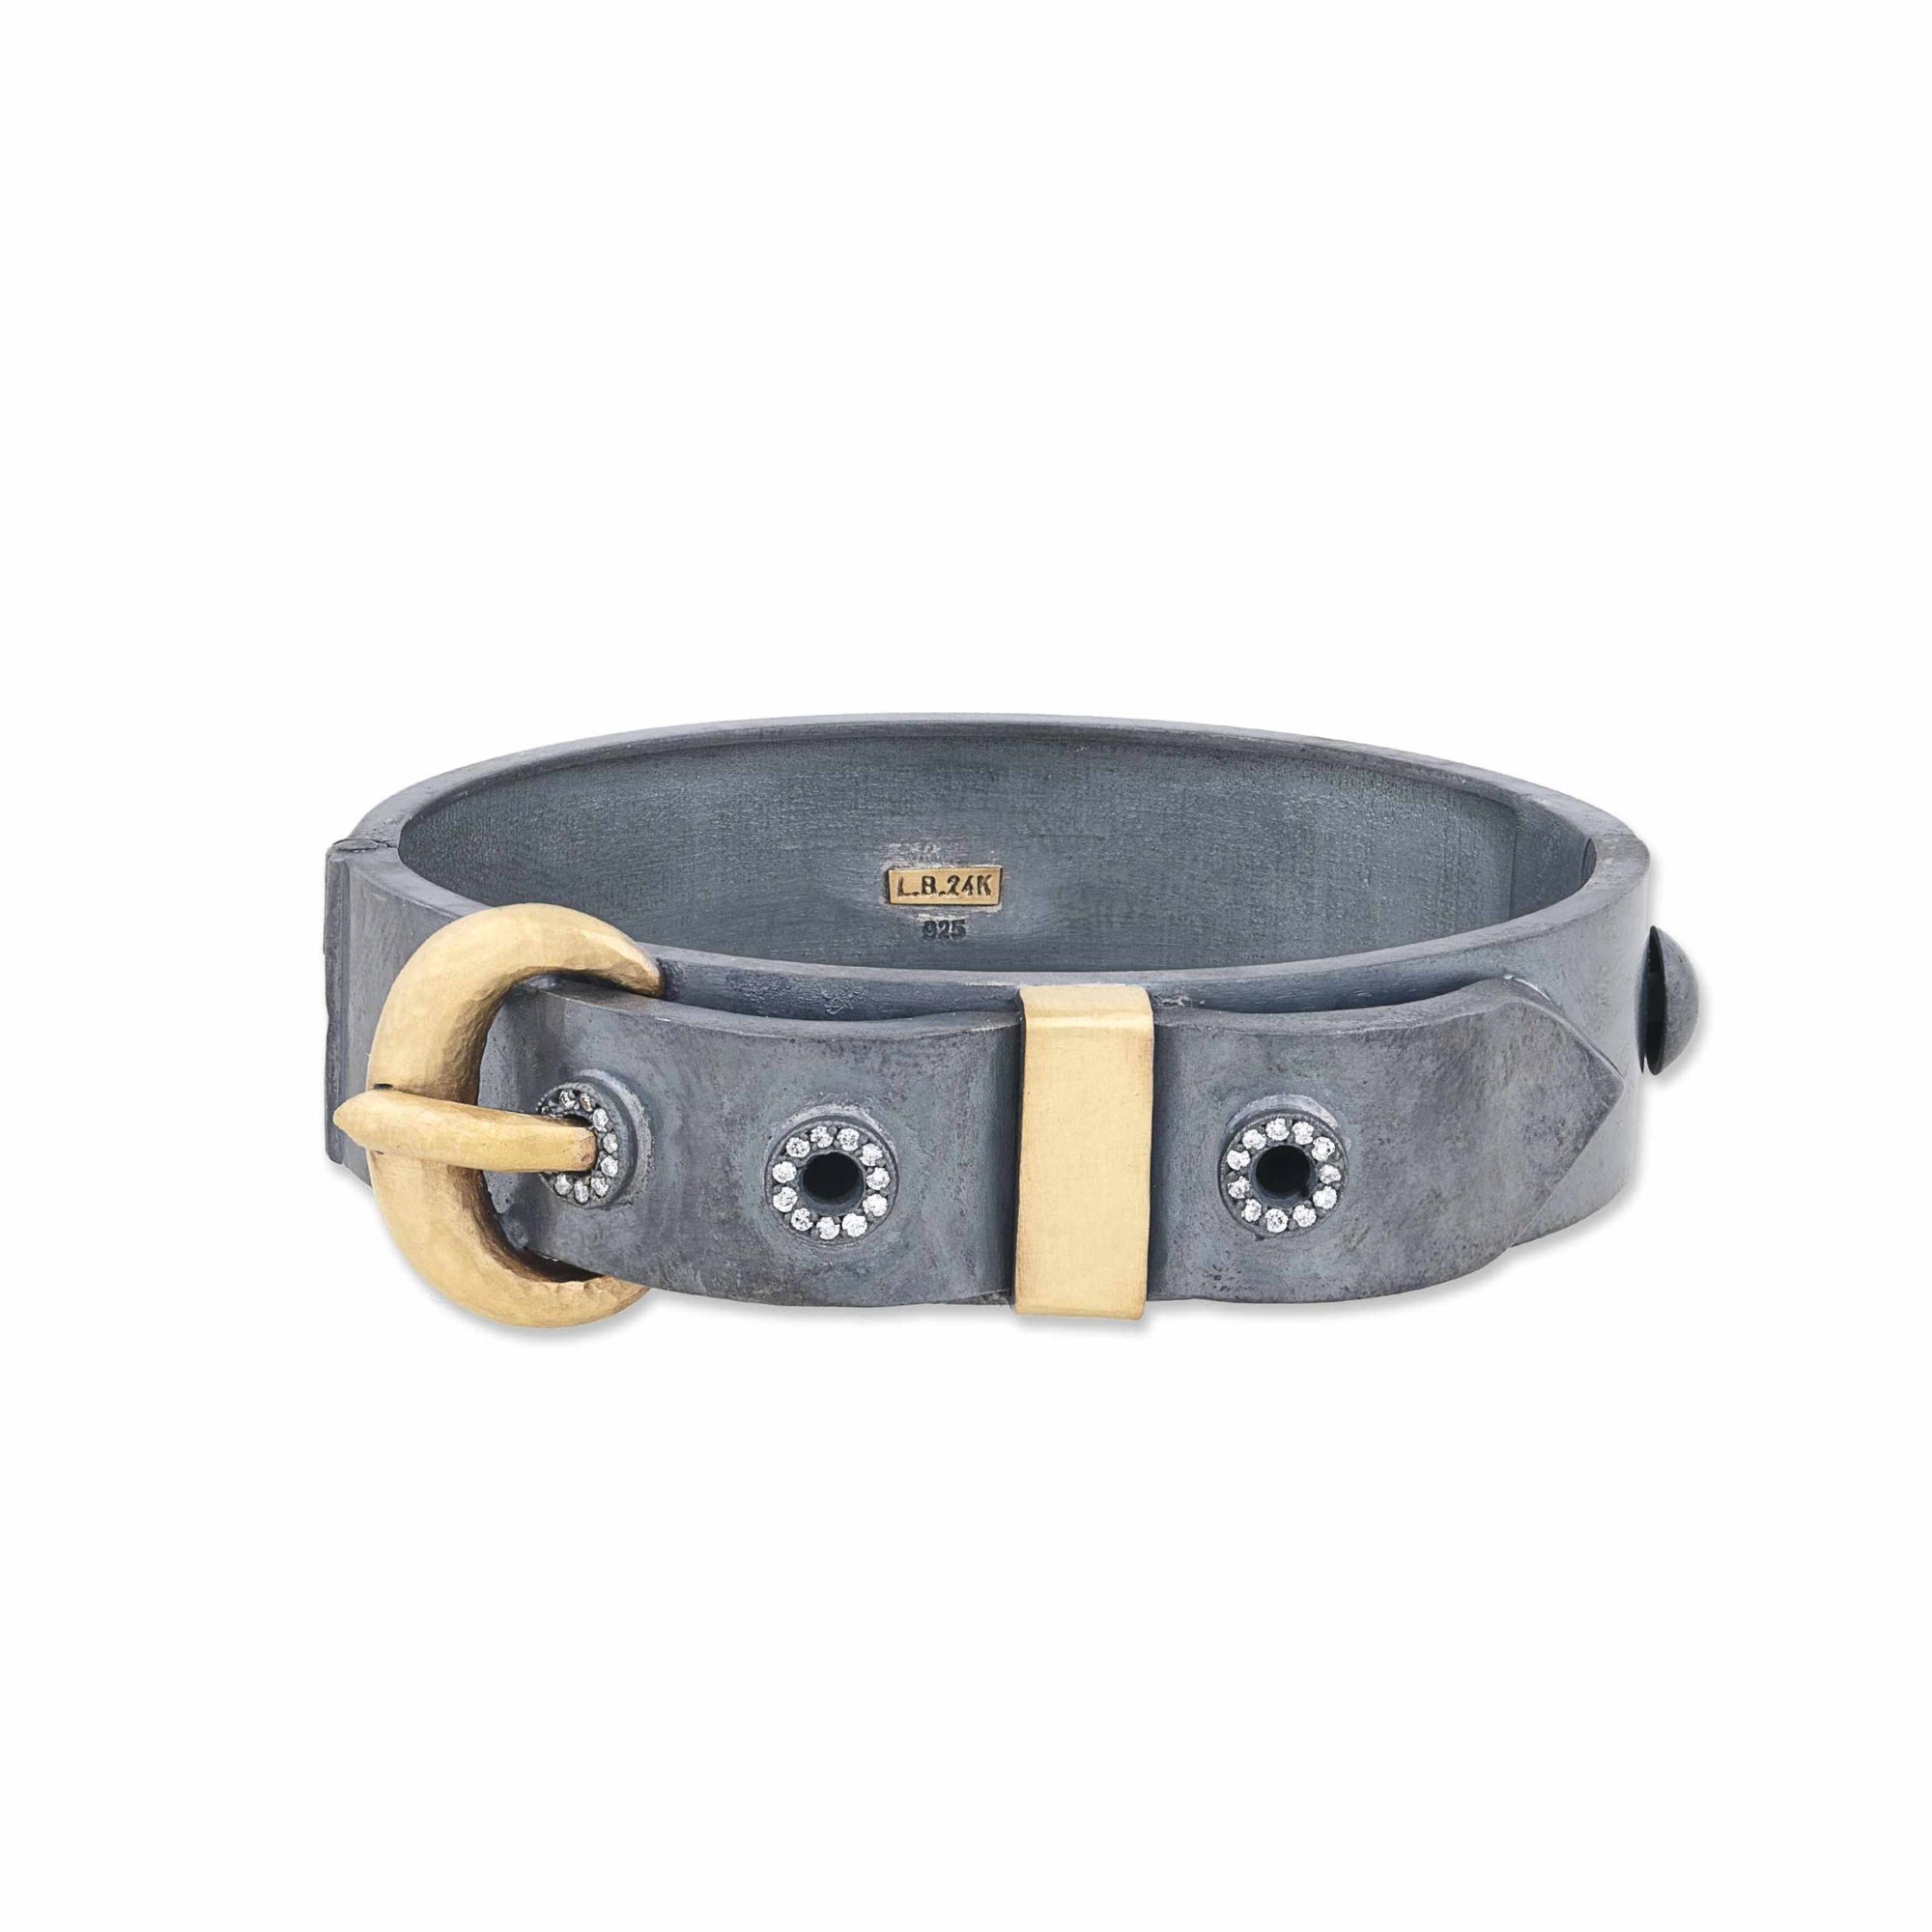 Lika Behar 24K Fusion Gold & Oxidized Silver Belt "Deco" Bracelet with Diamonds Accents